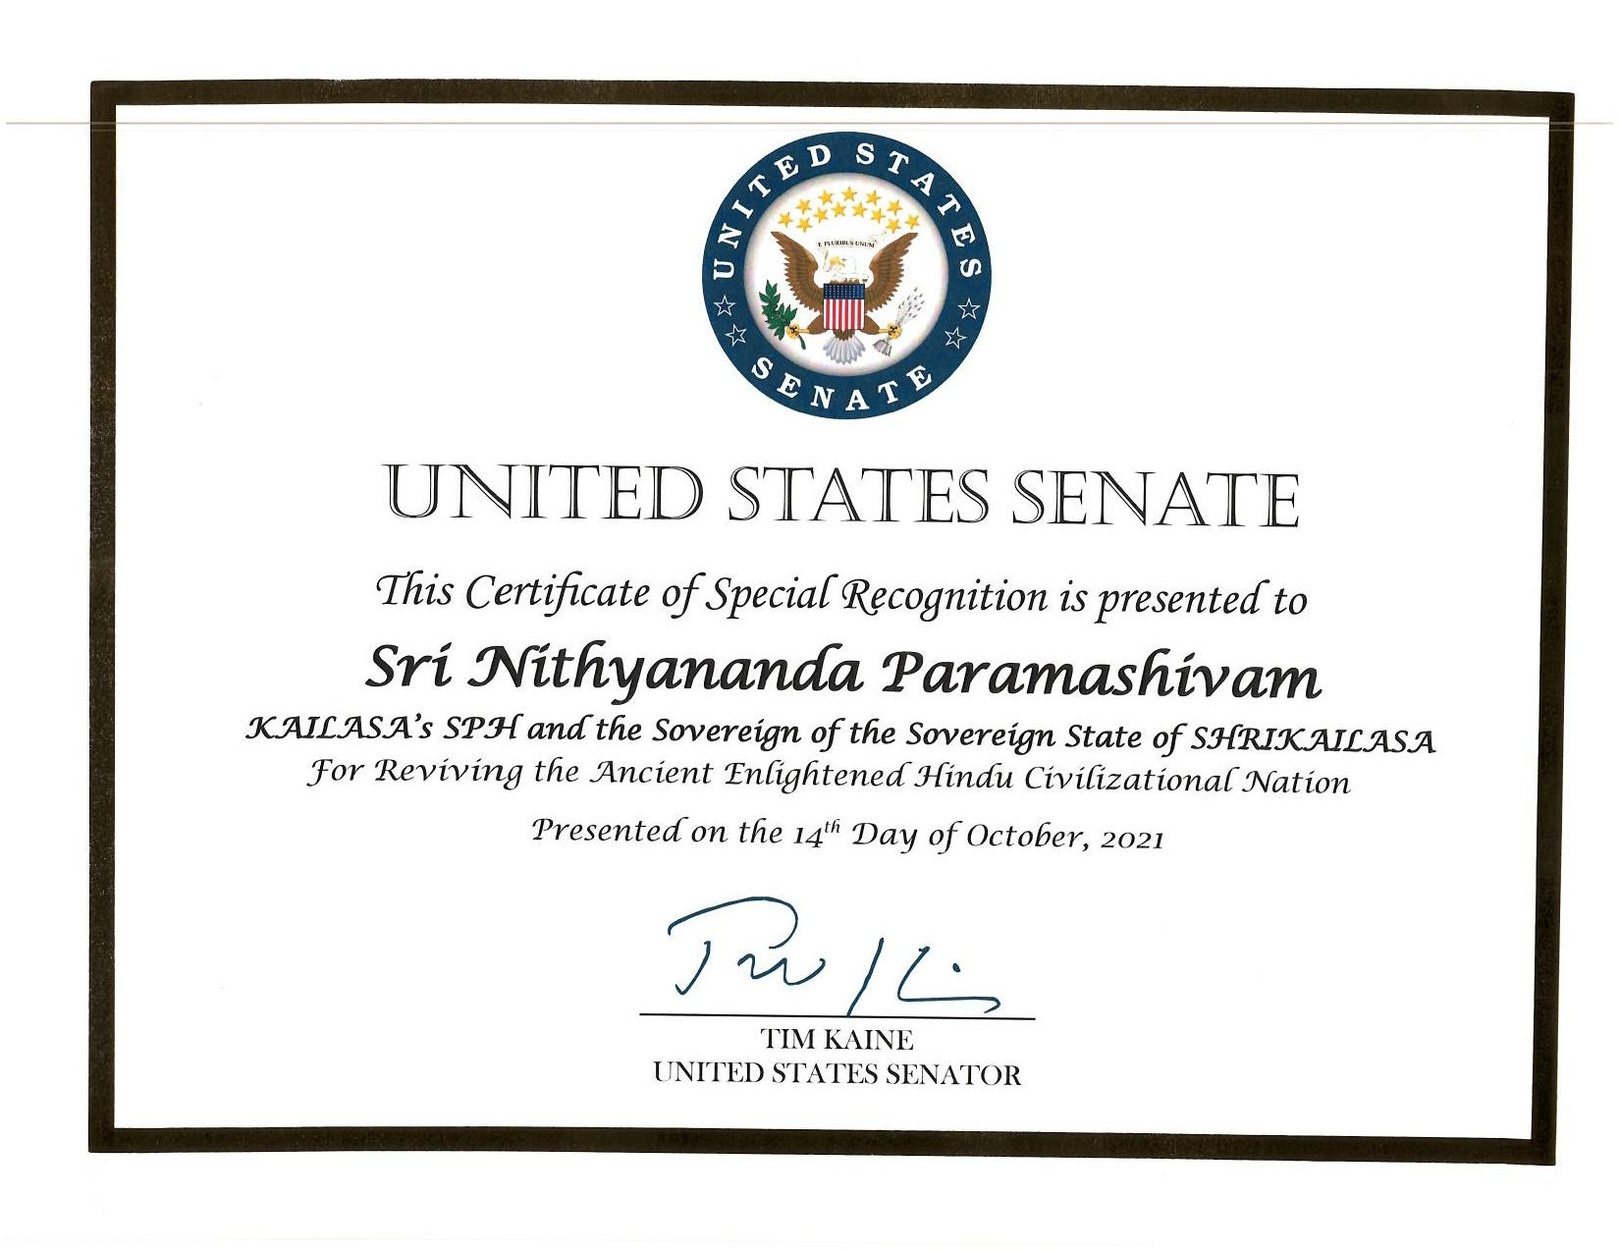 Recognition-United-States-of-America-senate-tim-kaine-2021-10-14.jpg